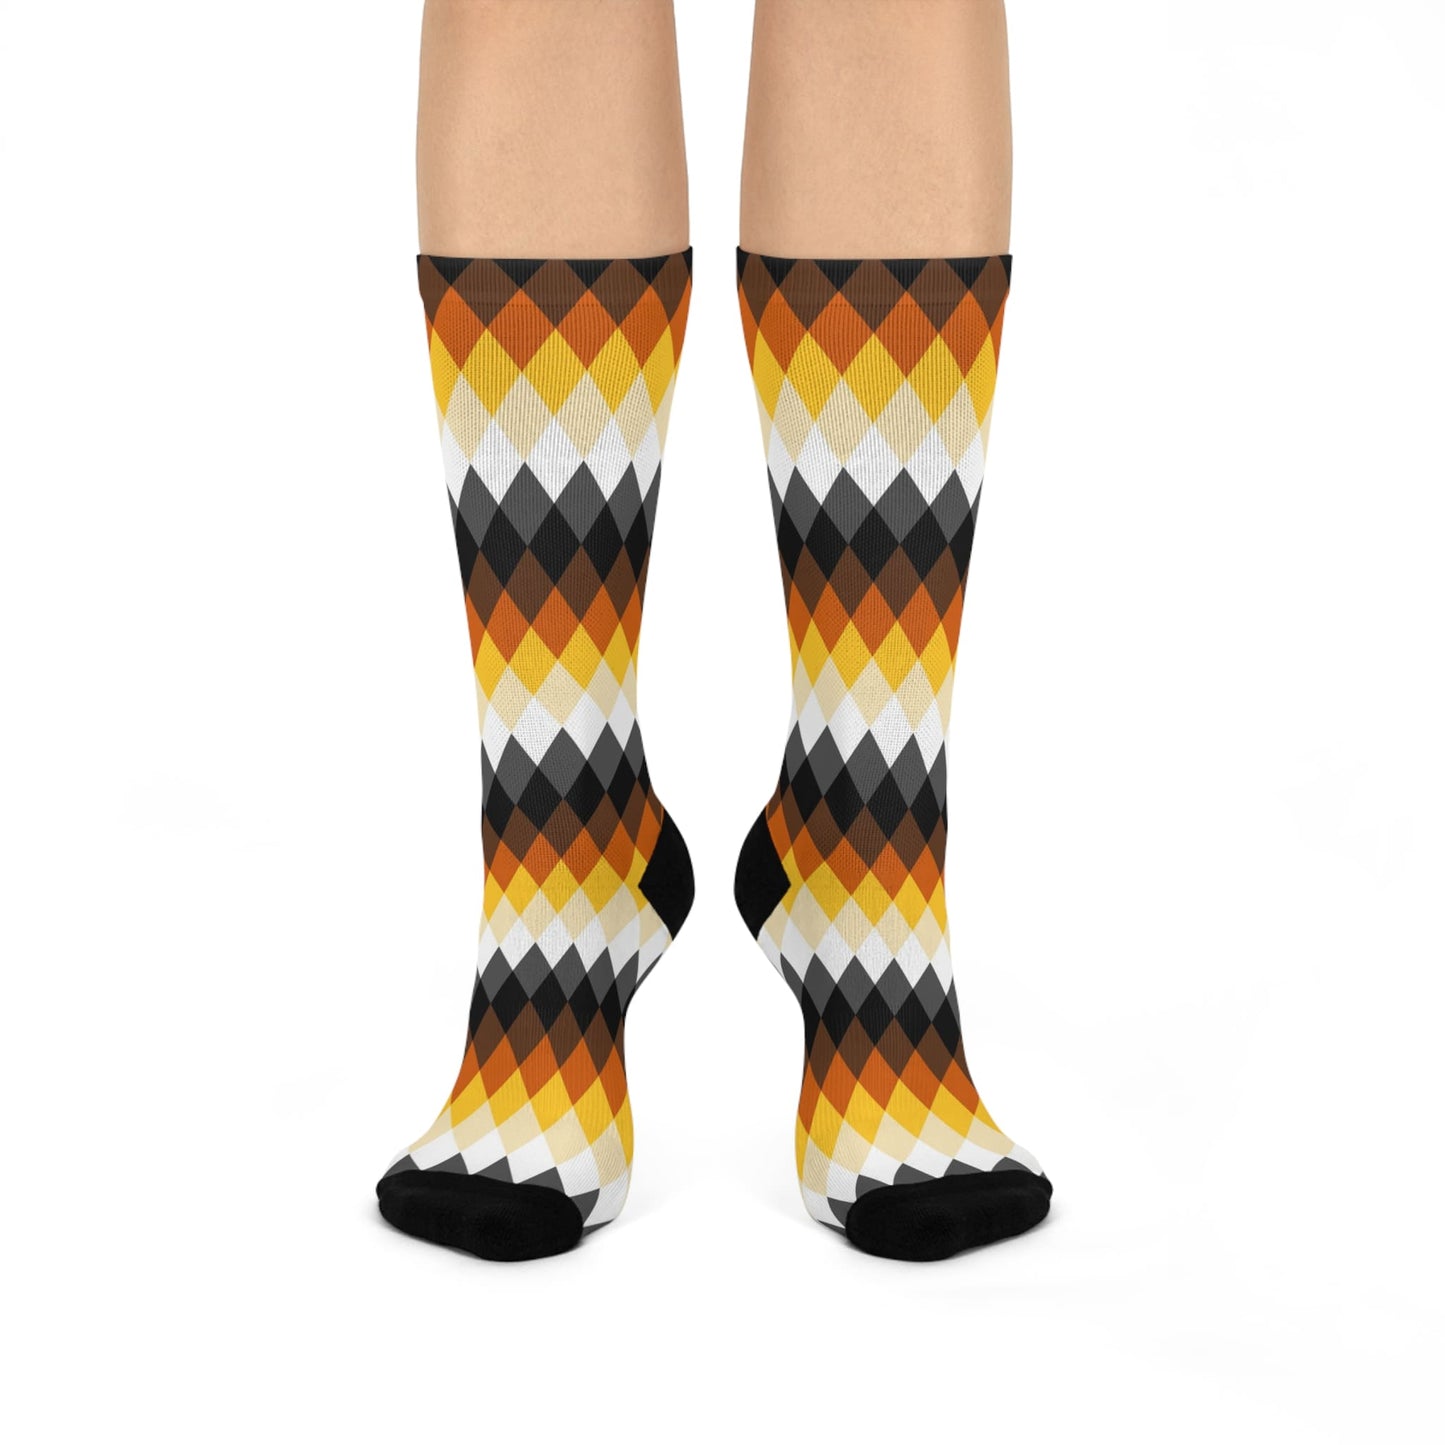 bear pride socks, discreet diamond pattern, front